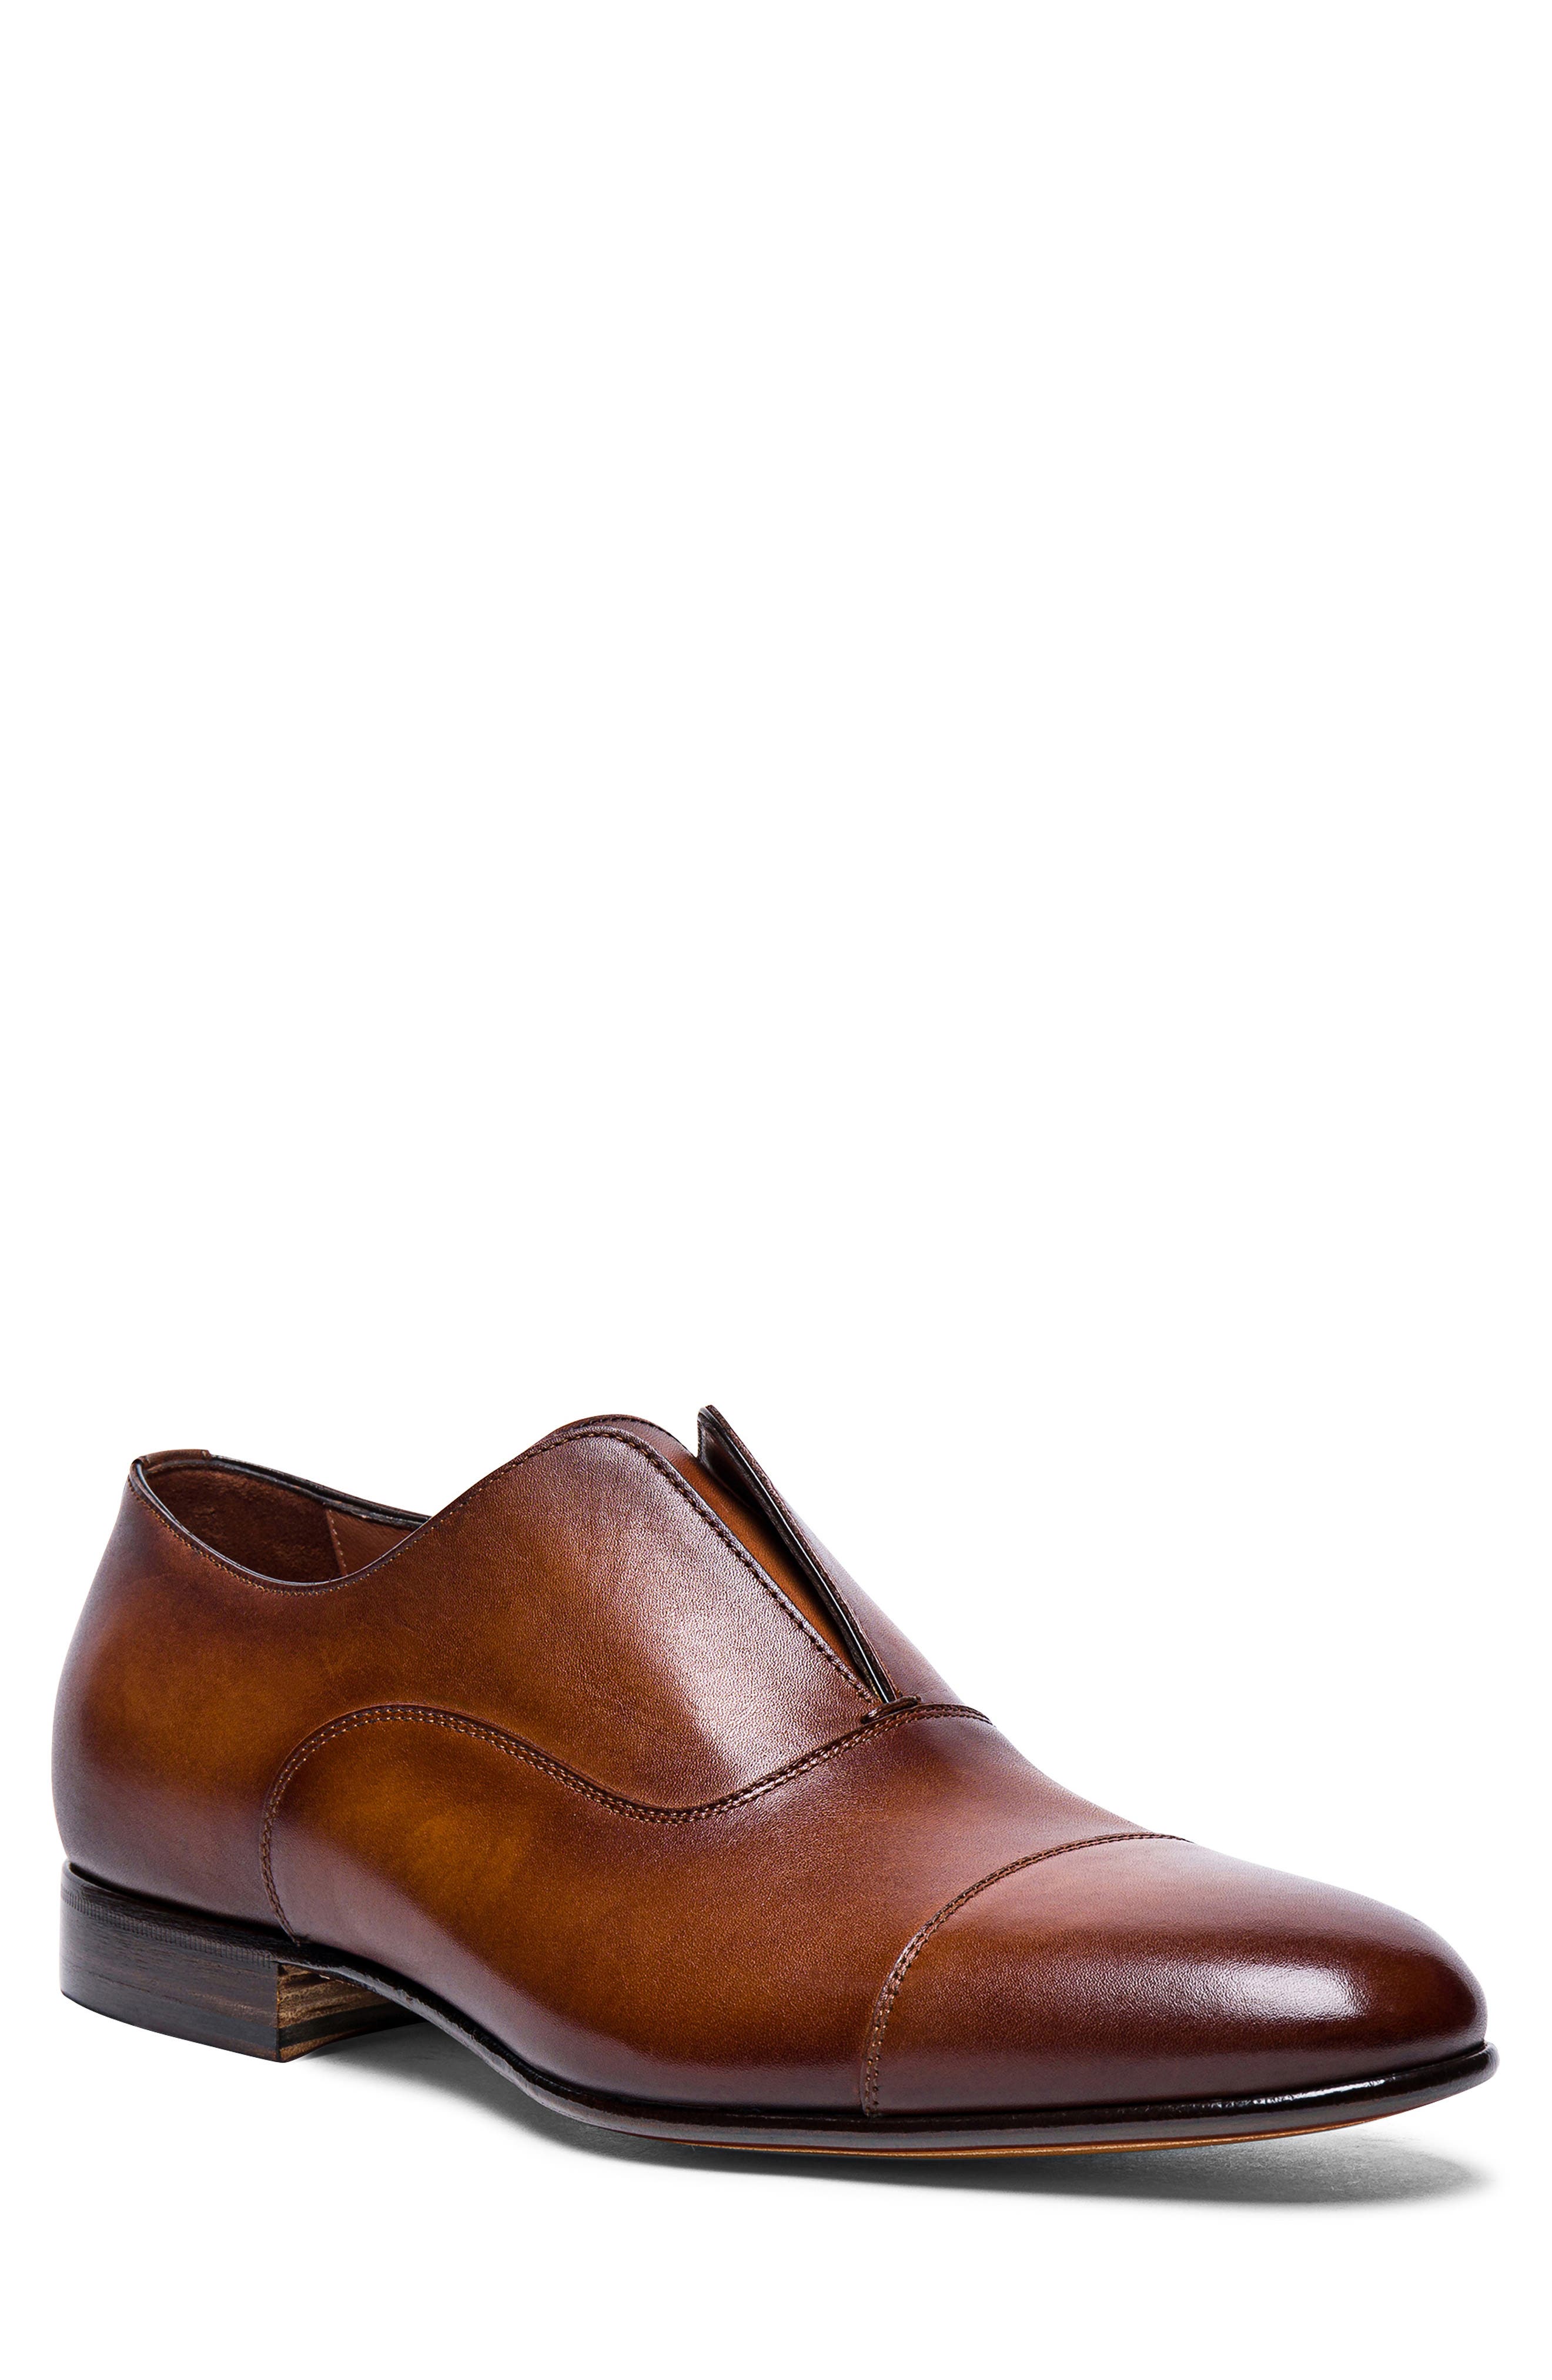 Santoni double-monk strap woven shoes - Brown